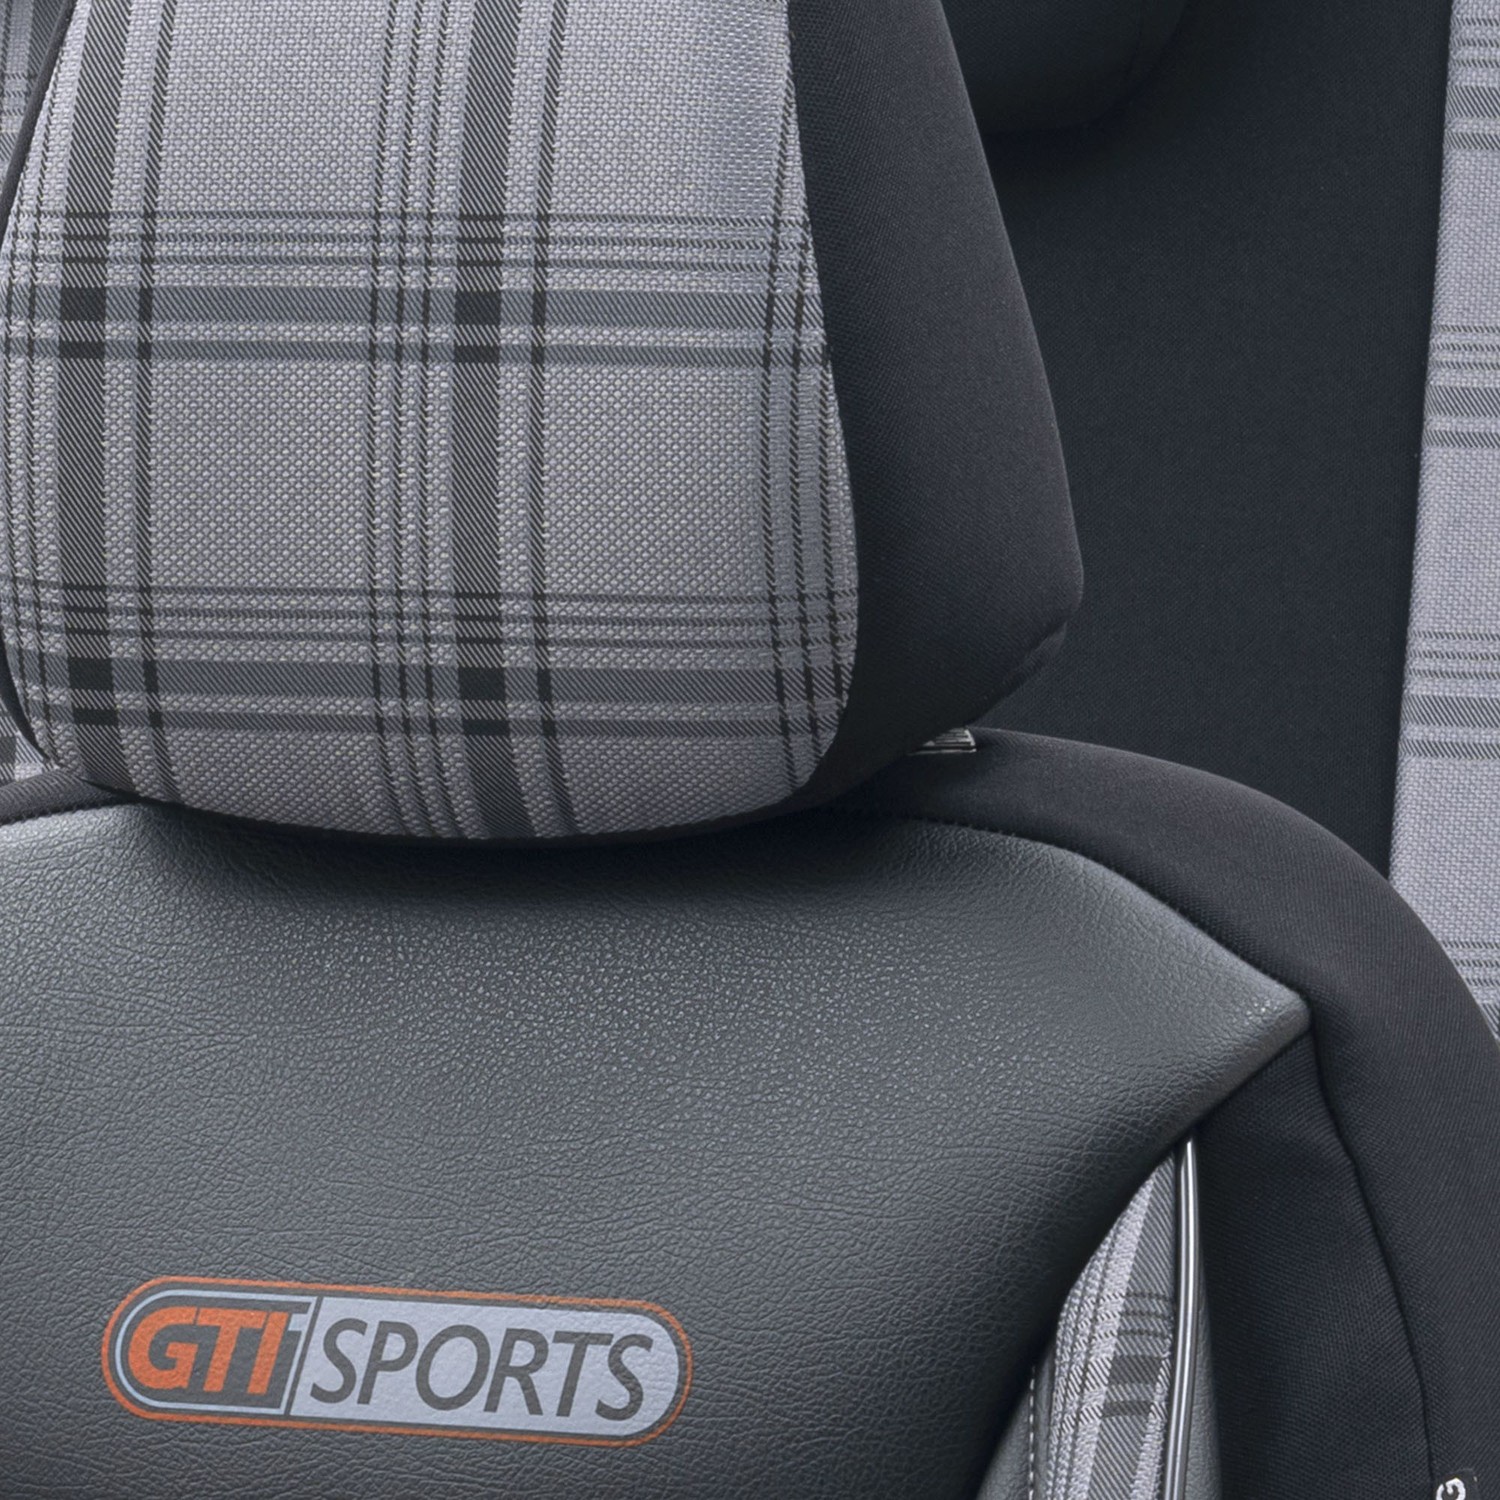 Otom GTI Sports Series Hafif Ticari Oto Koltuk Kılıfı Fiyatı